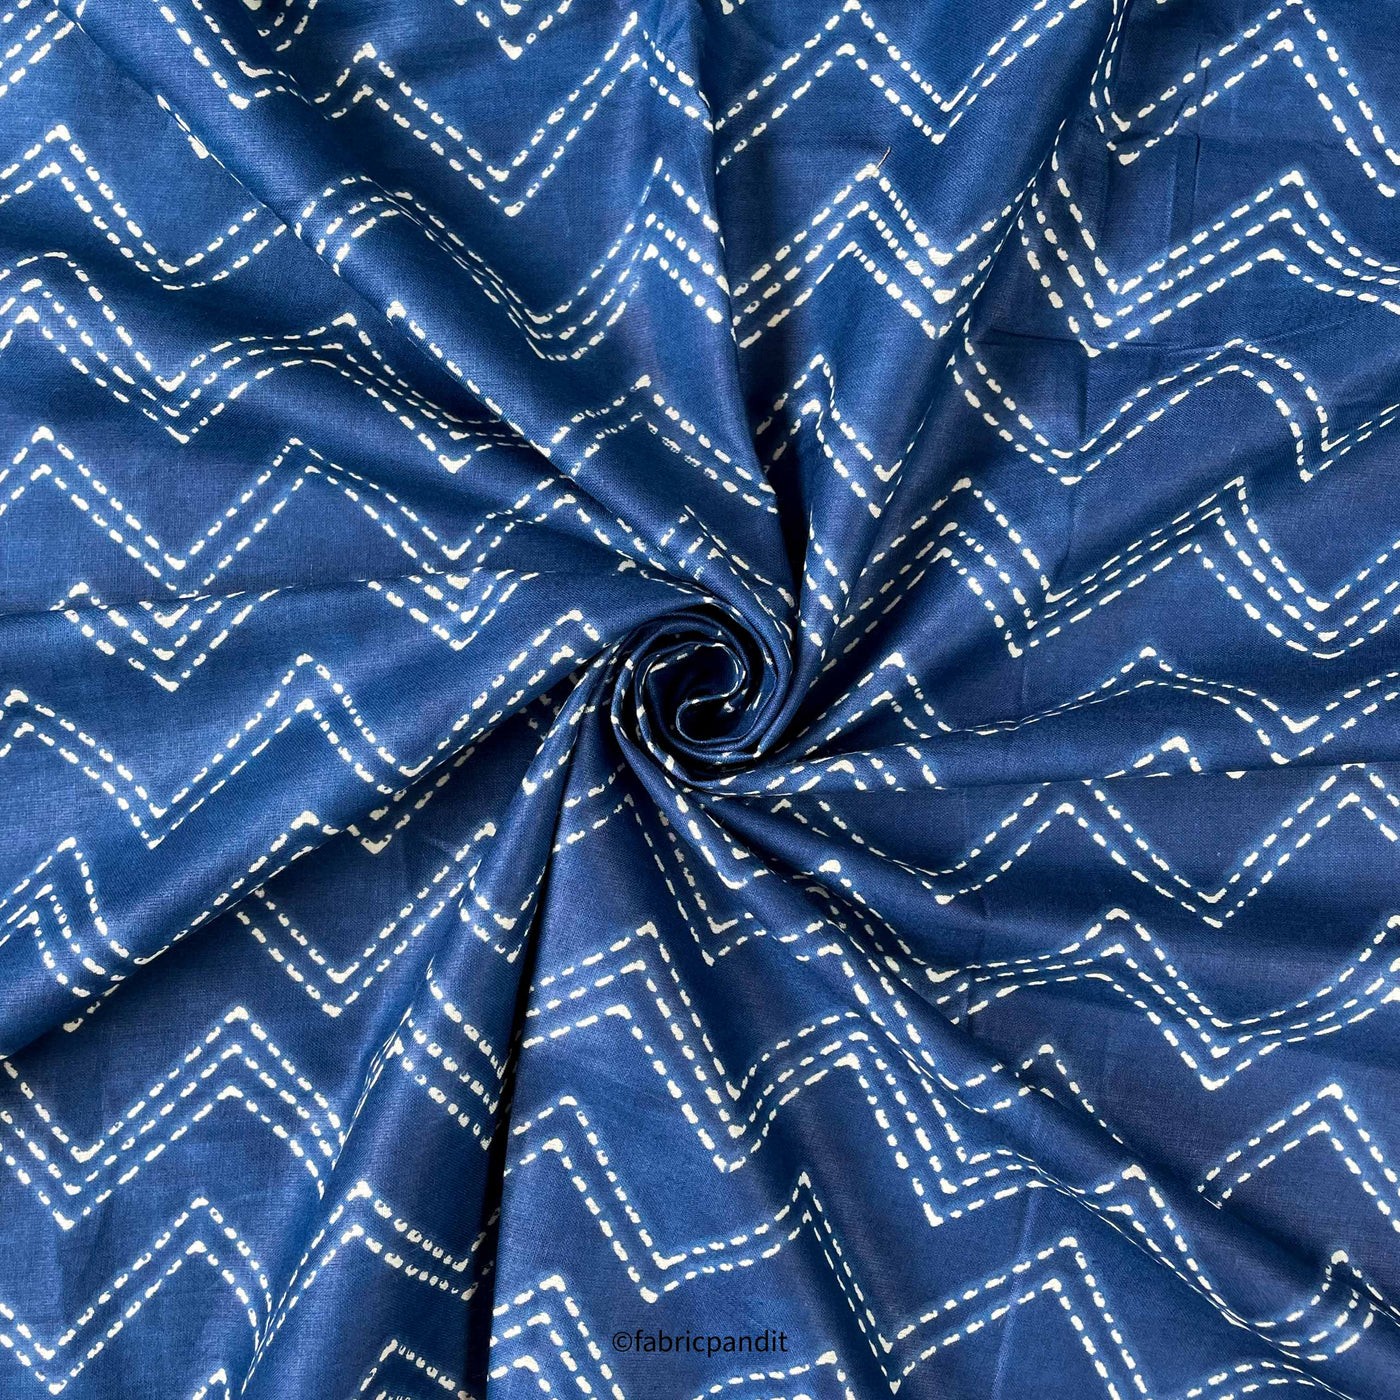 Blue Batik Fabric by the Yard From Java Batiks by Island Batiks, Blue Gray  Batik, Dark Blue and Gray Batik, 21326 